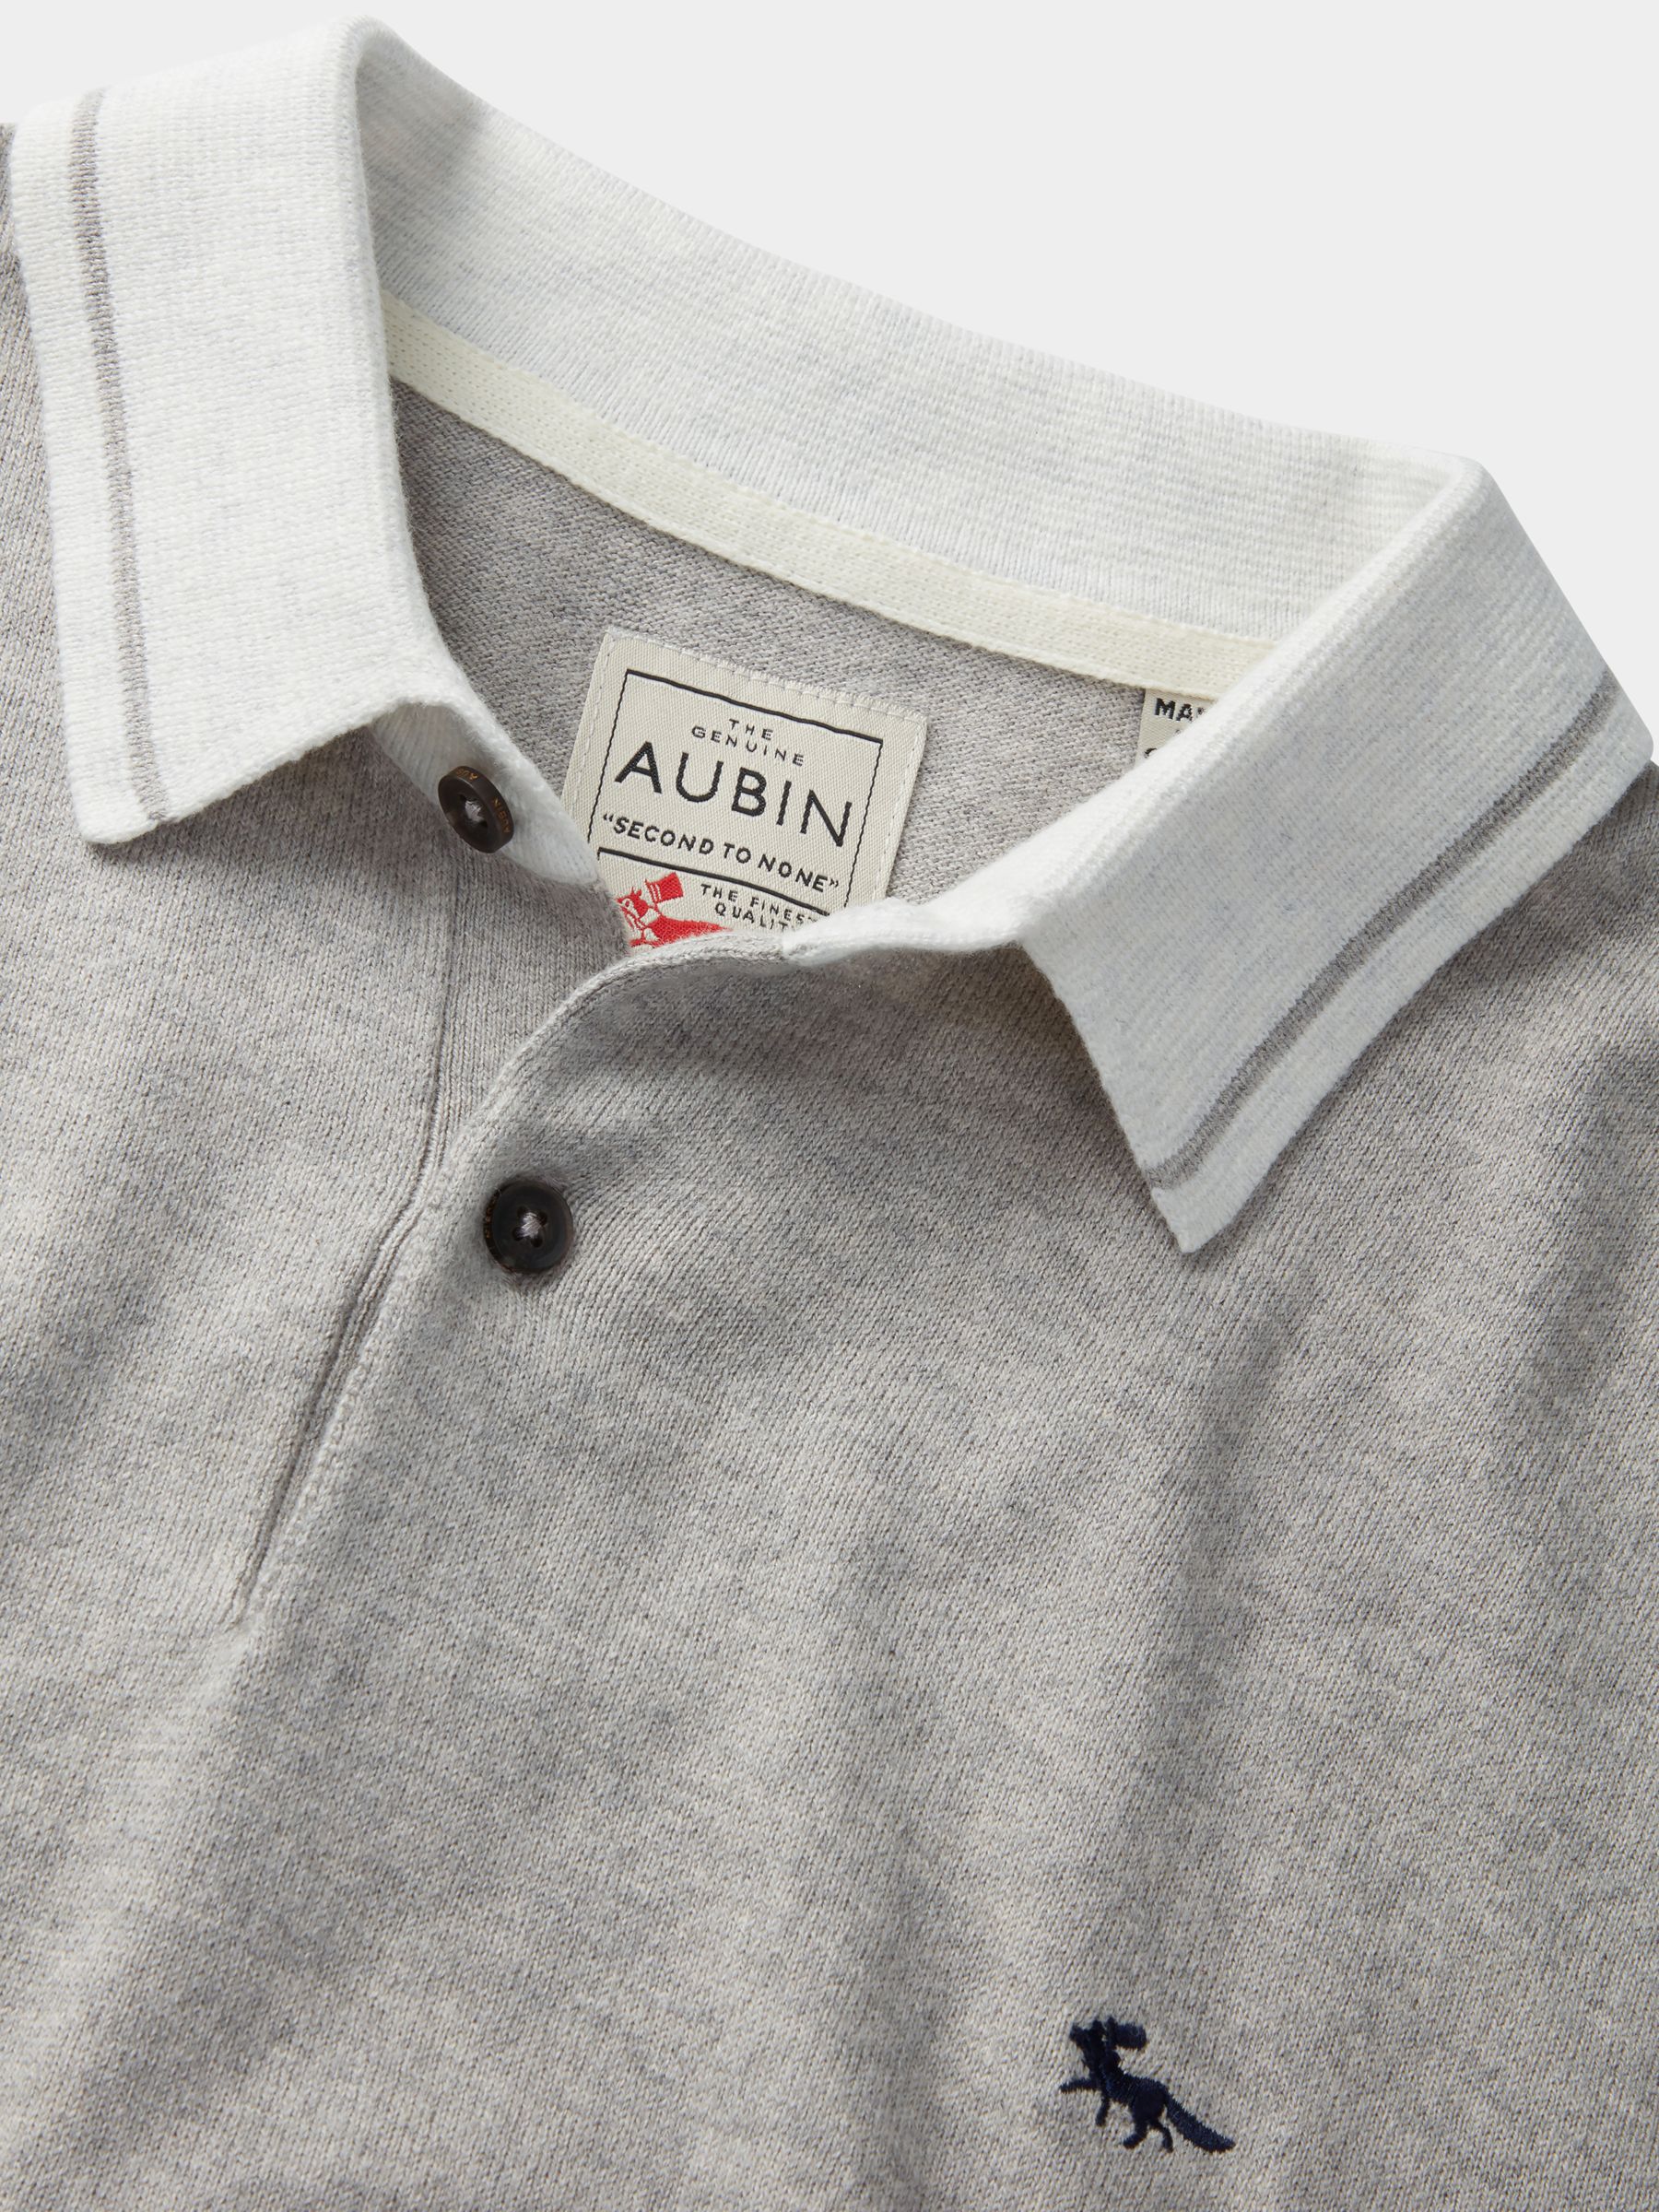 Aubin Dryden Cotton & Cashmere Knitted Short Sleeve Polo Shirt, Light Grey, S